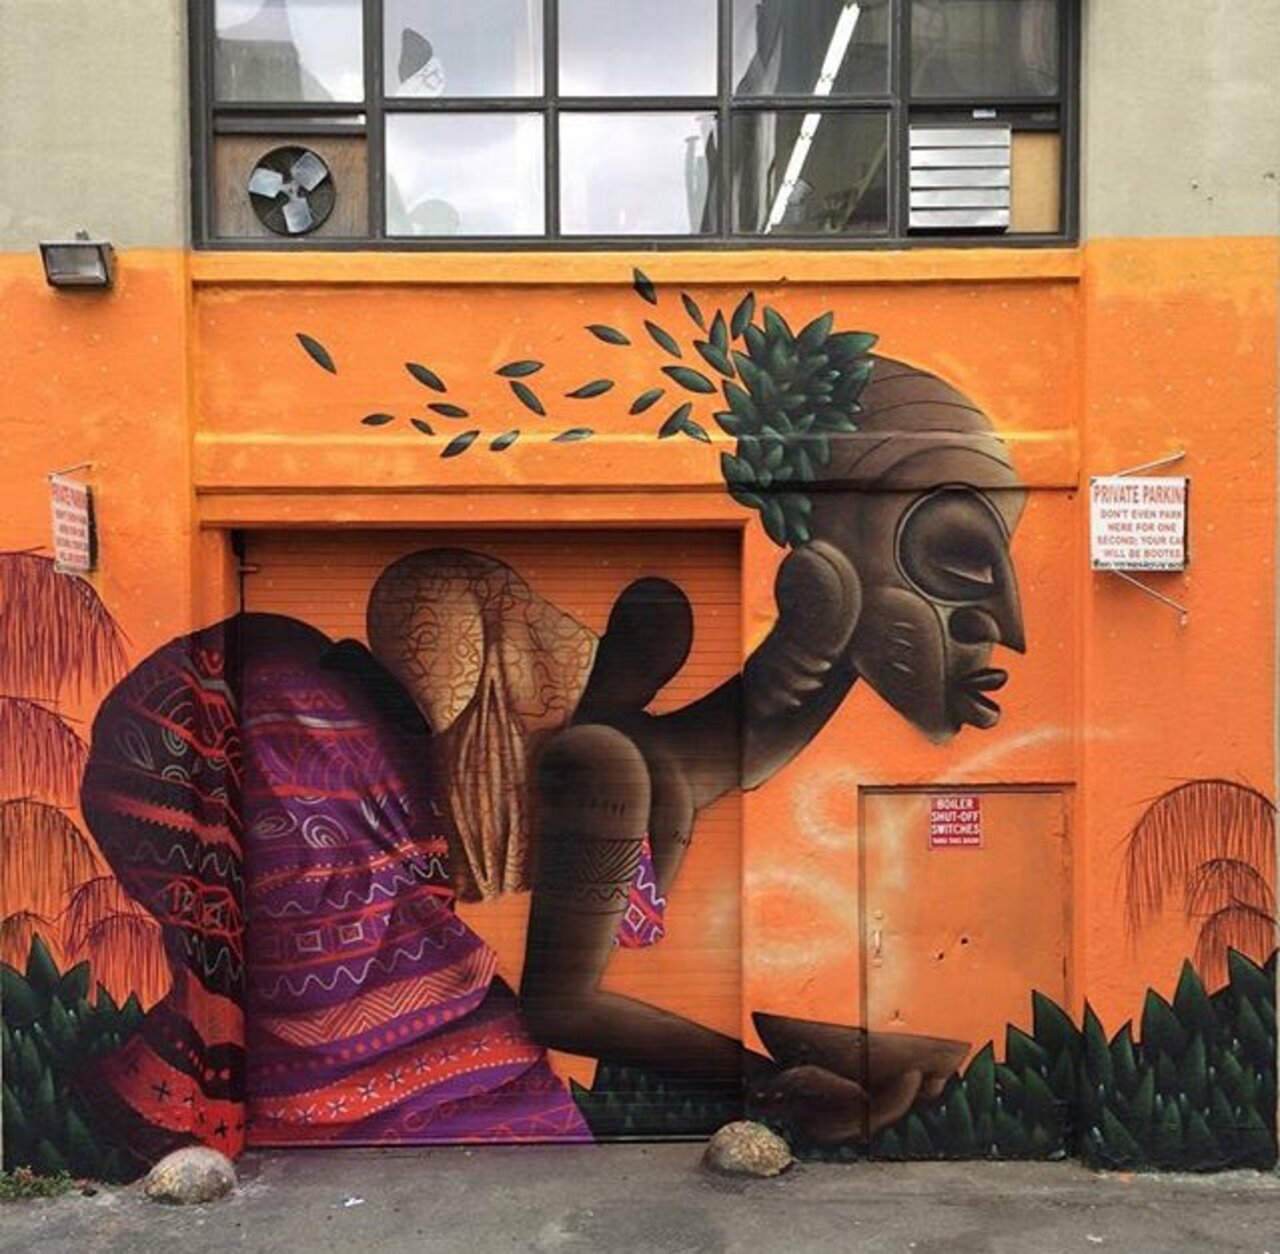 New Street Art by Alexandre Keto in NYC 

#art #graffiti #mural #streetart https://t.co/aysRgXe1xn